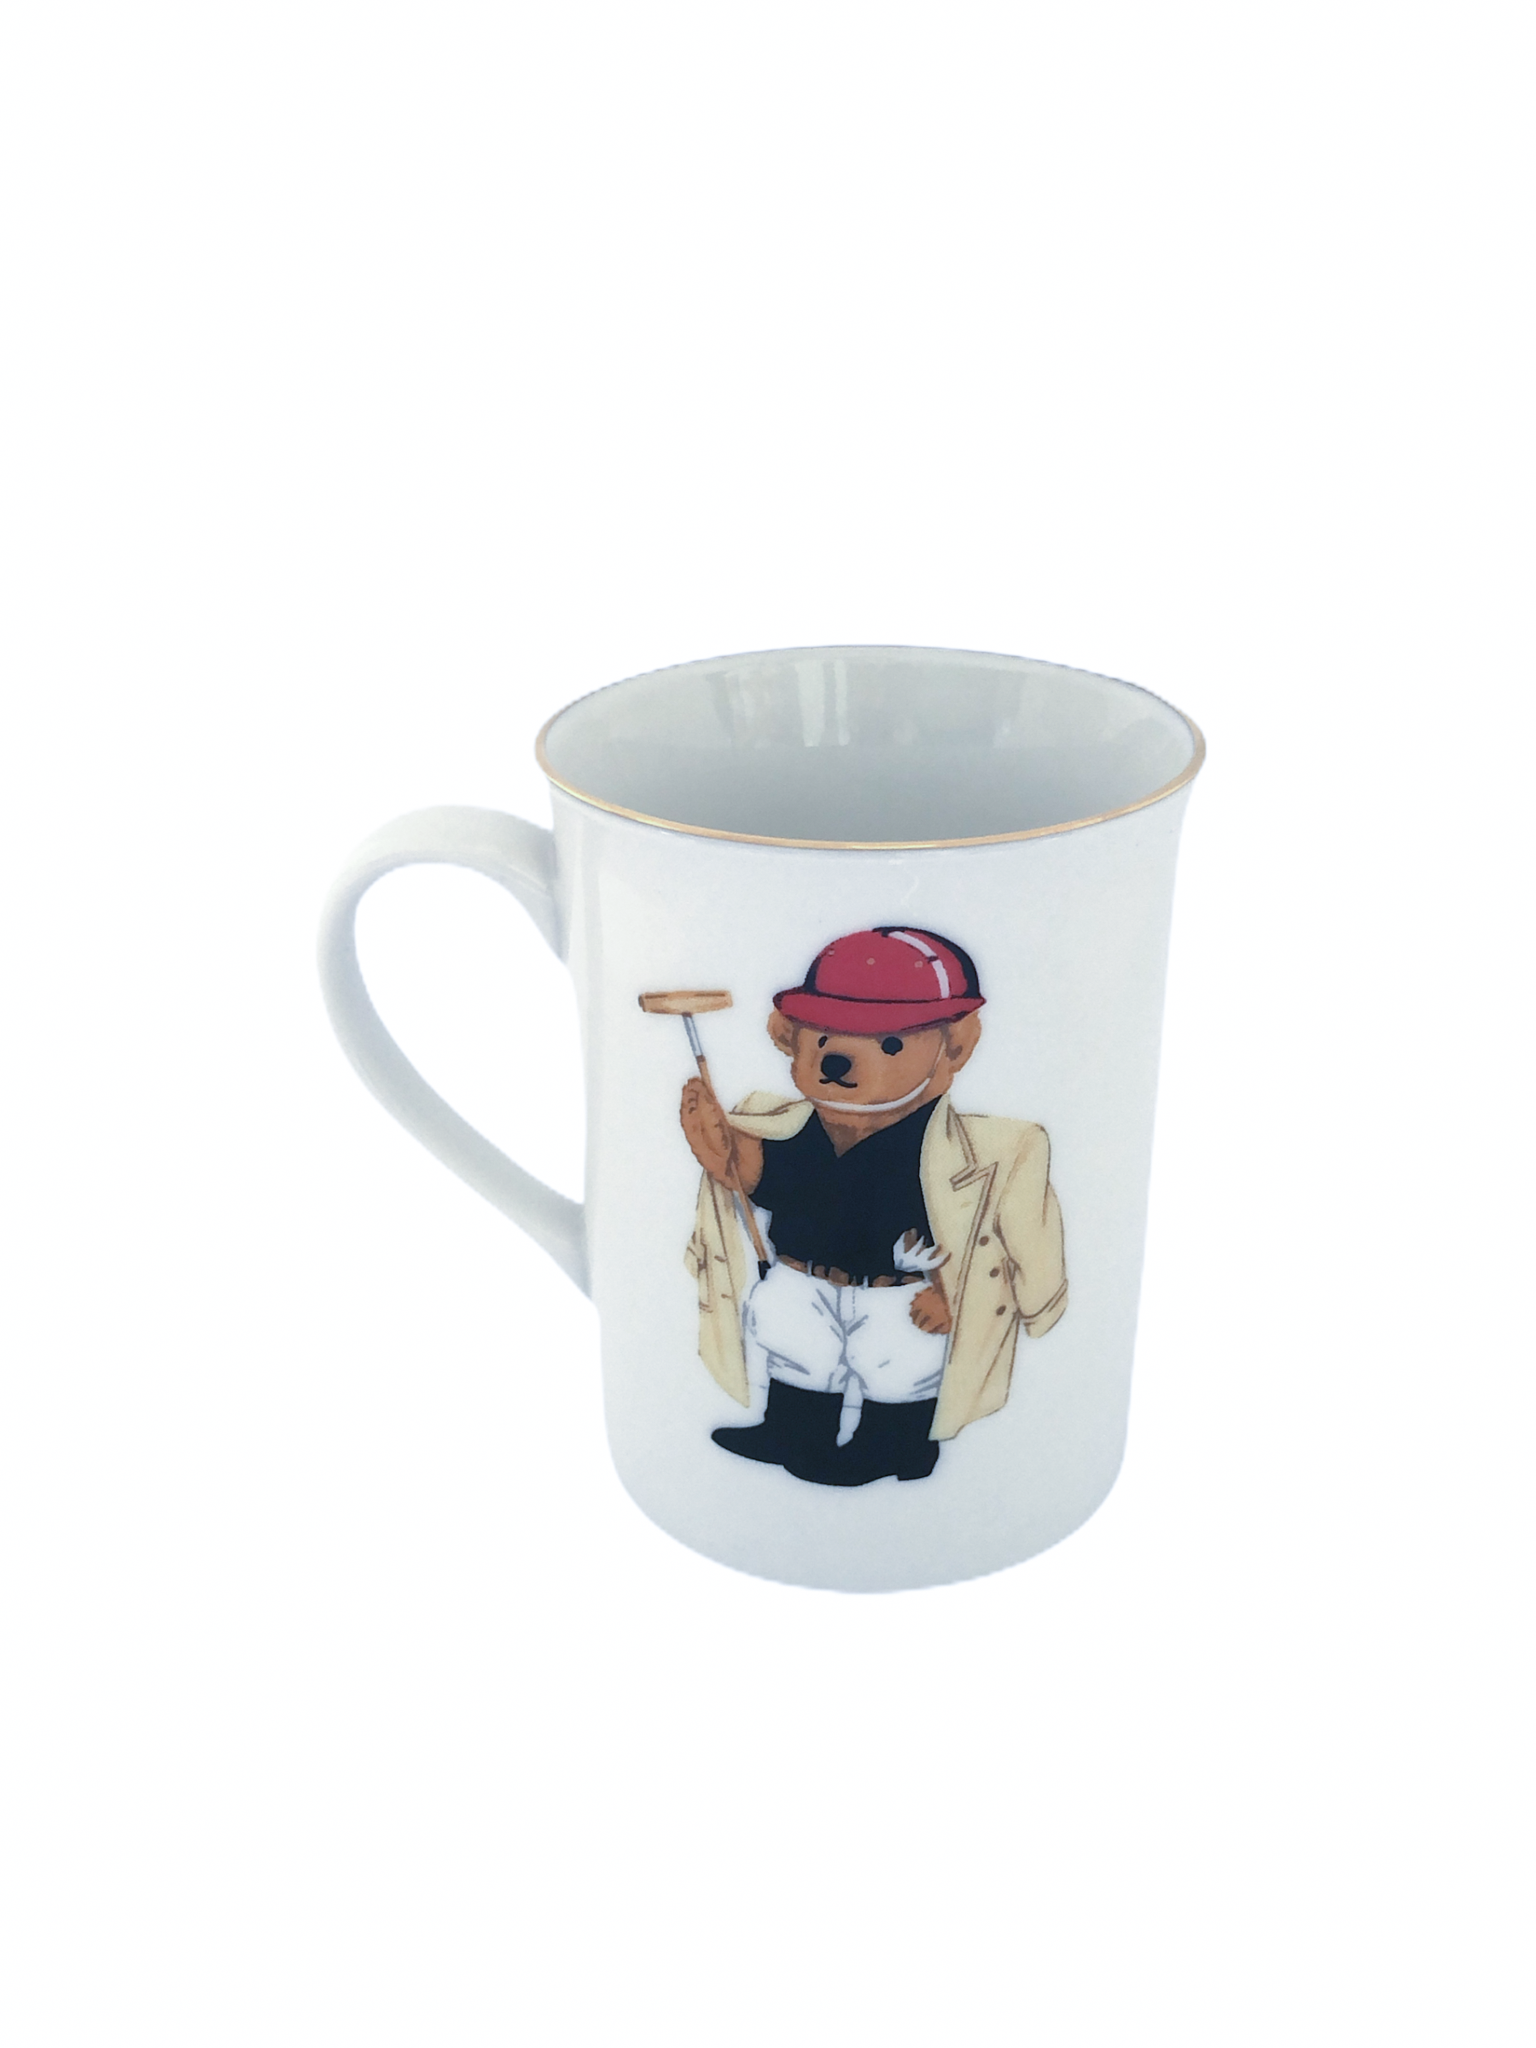 Teddy Bear Porcelain Mug with Golf Player White